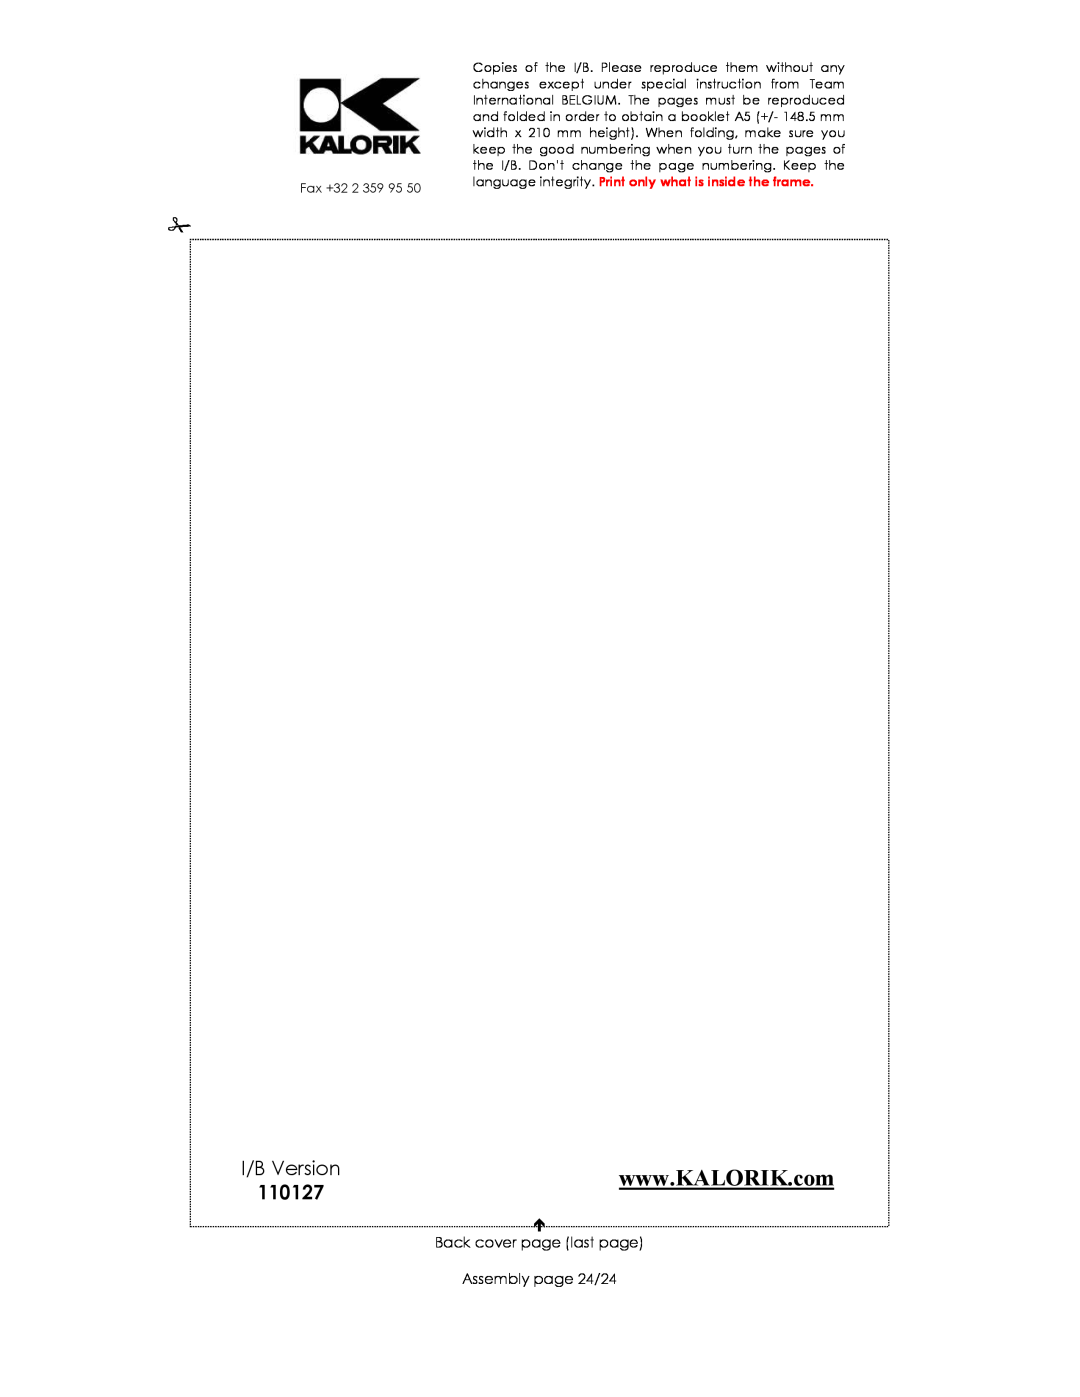 Kalorik USK OV 32091 manual I/B Version, 110127, Back cover page last page, Assembly page 24/24 